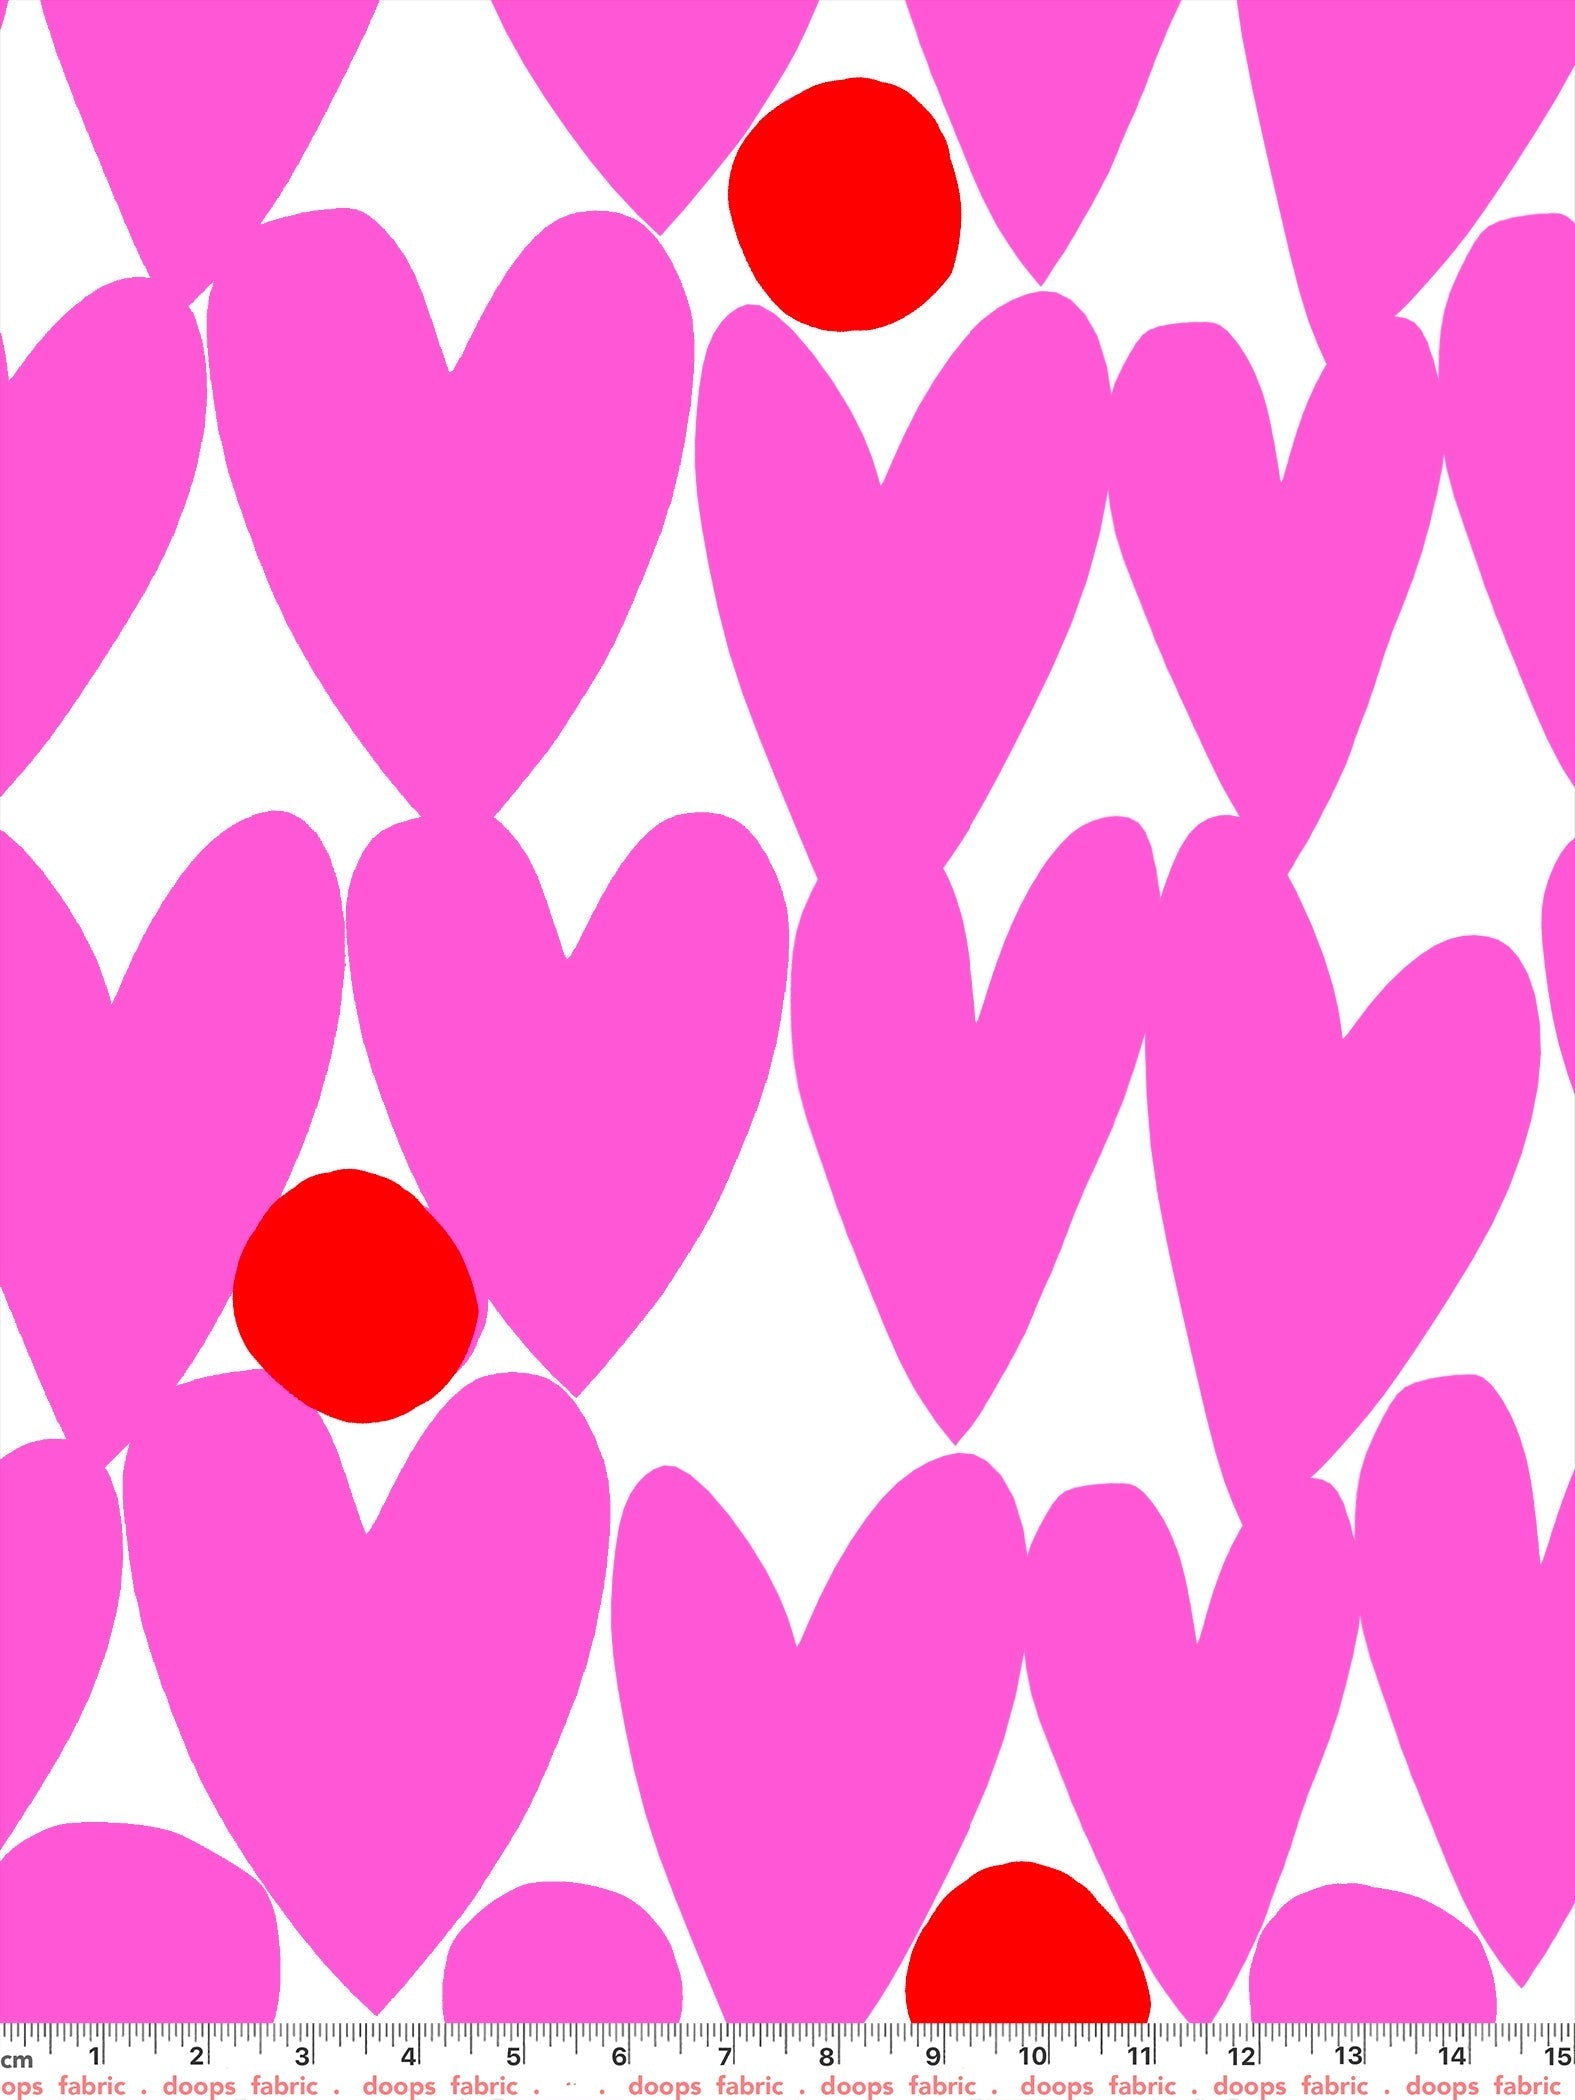 Sweet Pink Love JERSEY (CUT PIECE 1.4M)